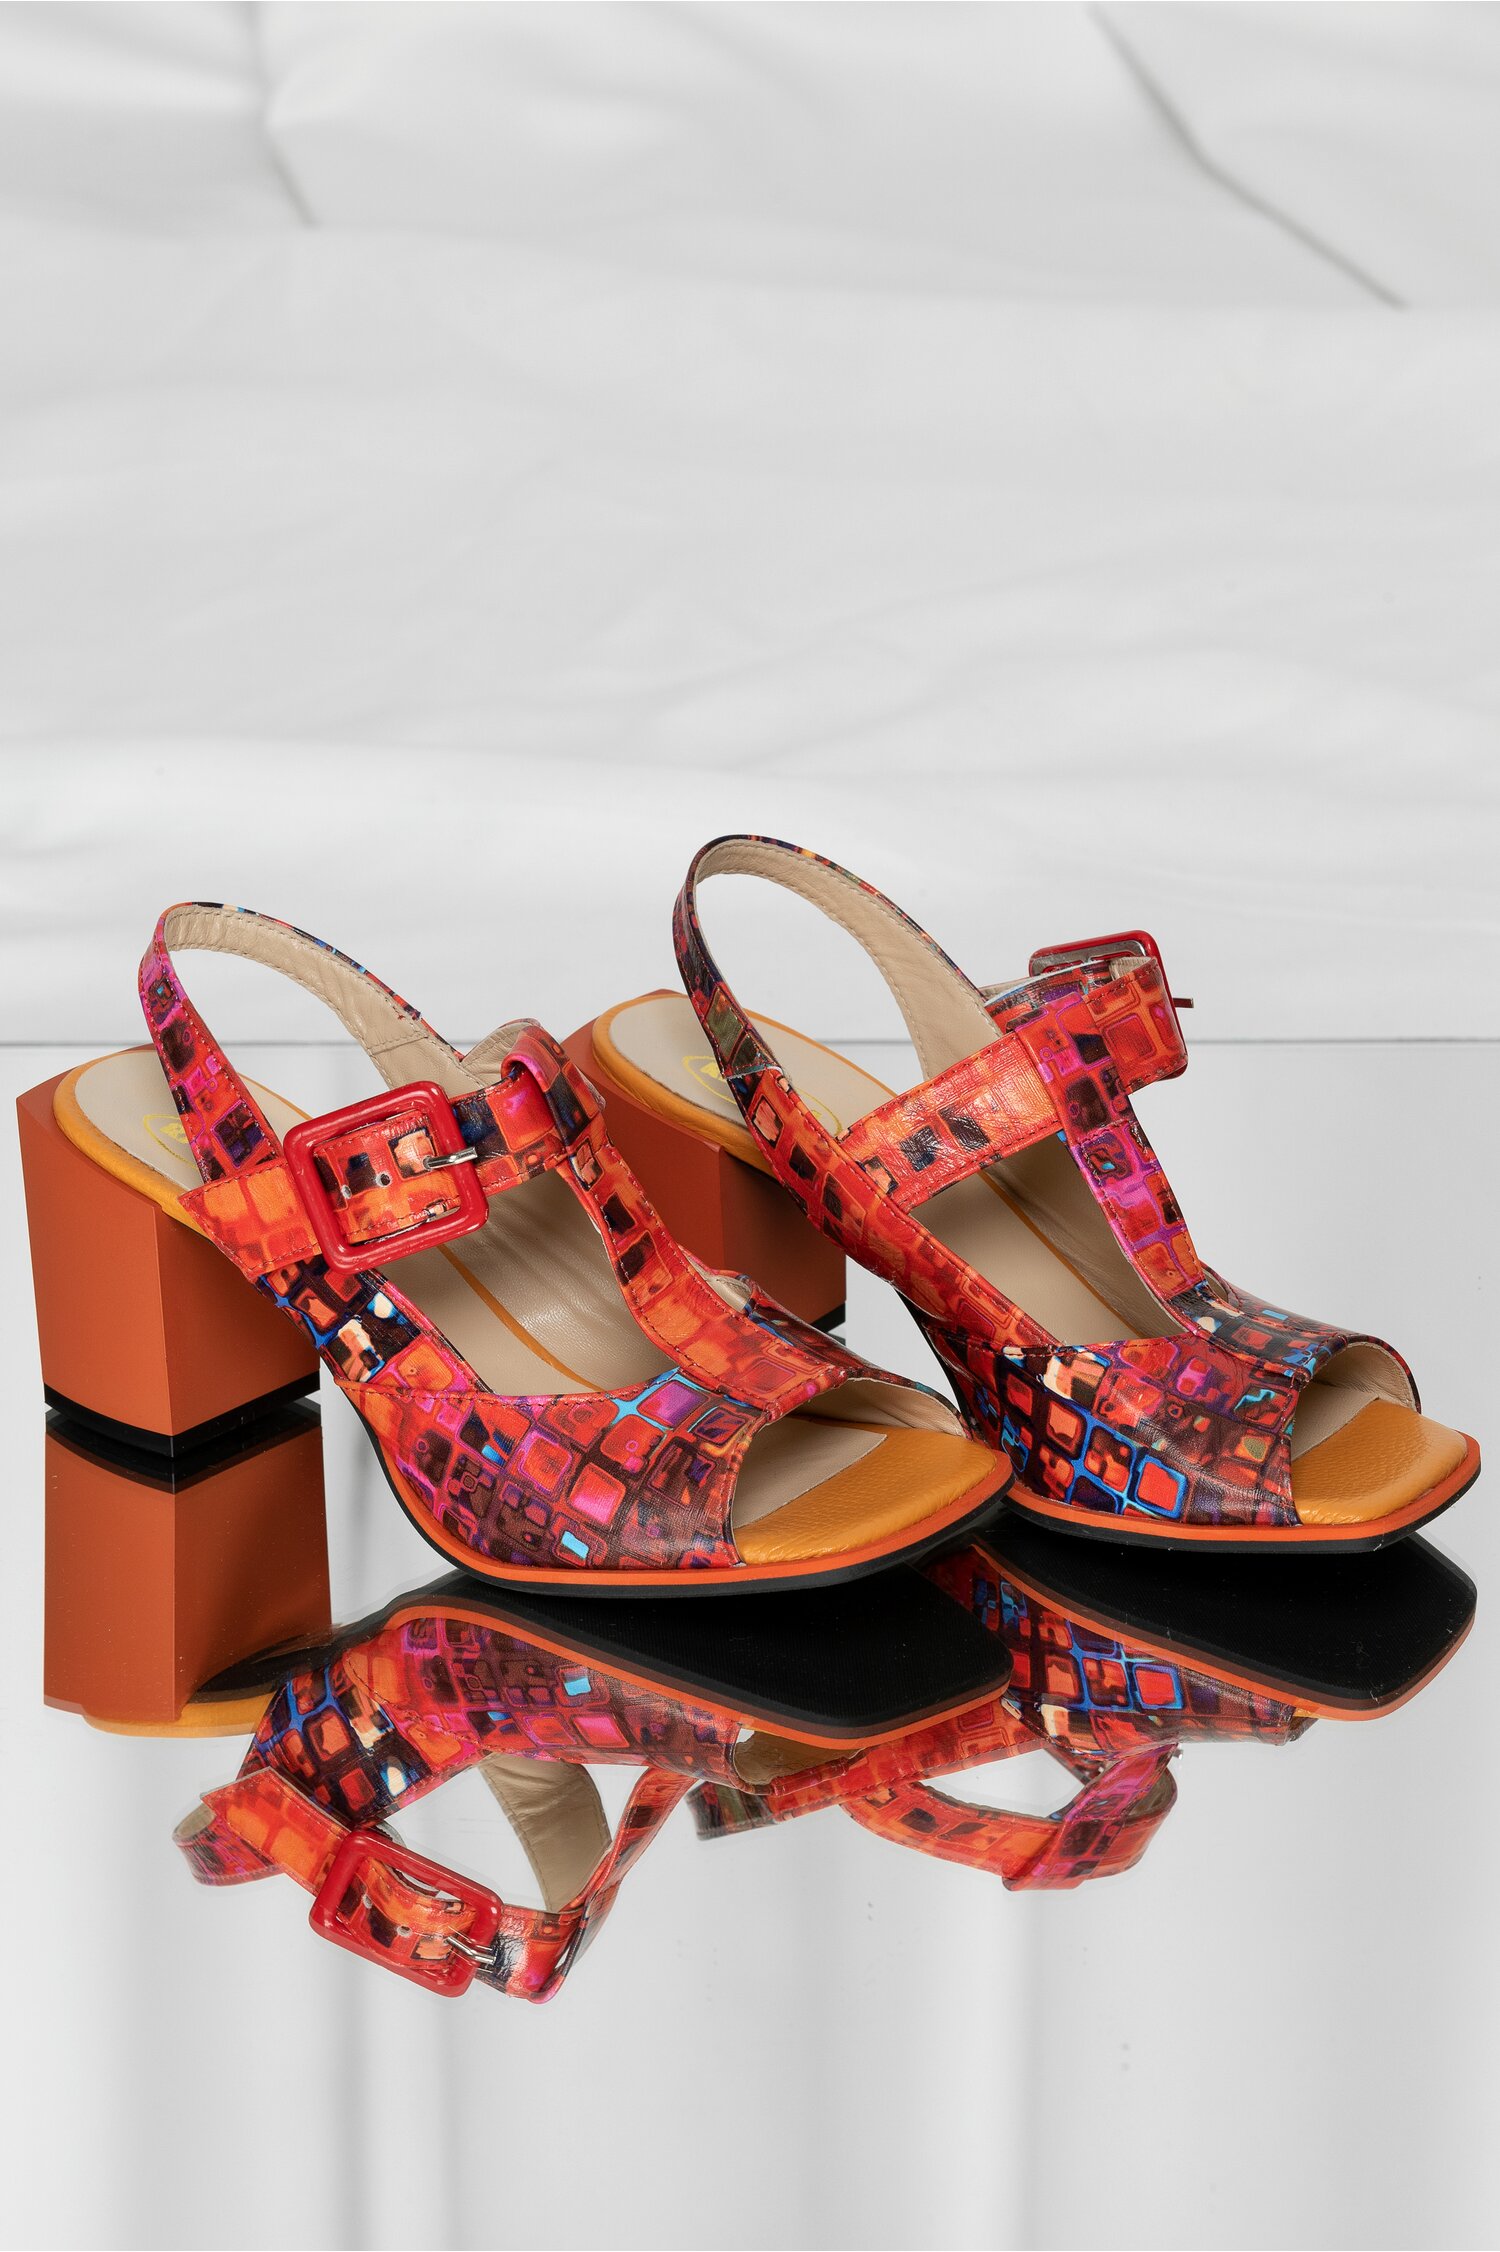 Sandale din piele oranj cu detalii multicolore si toc gros dyfashion.ro imagine megaplaza.ro